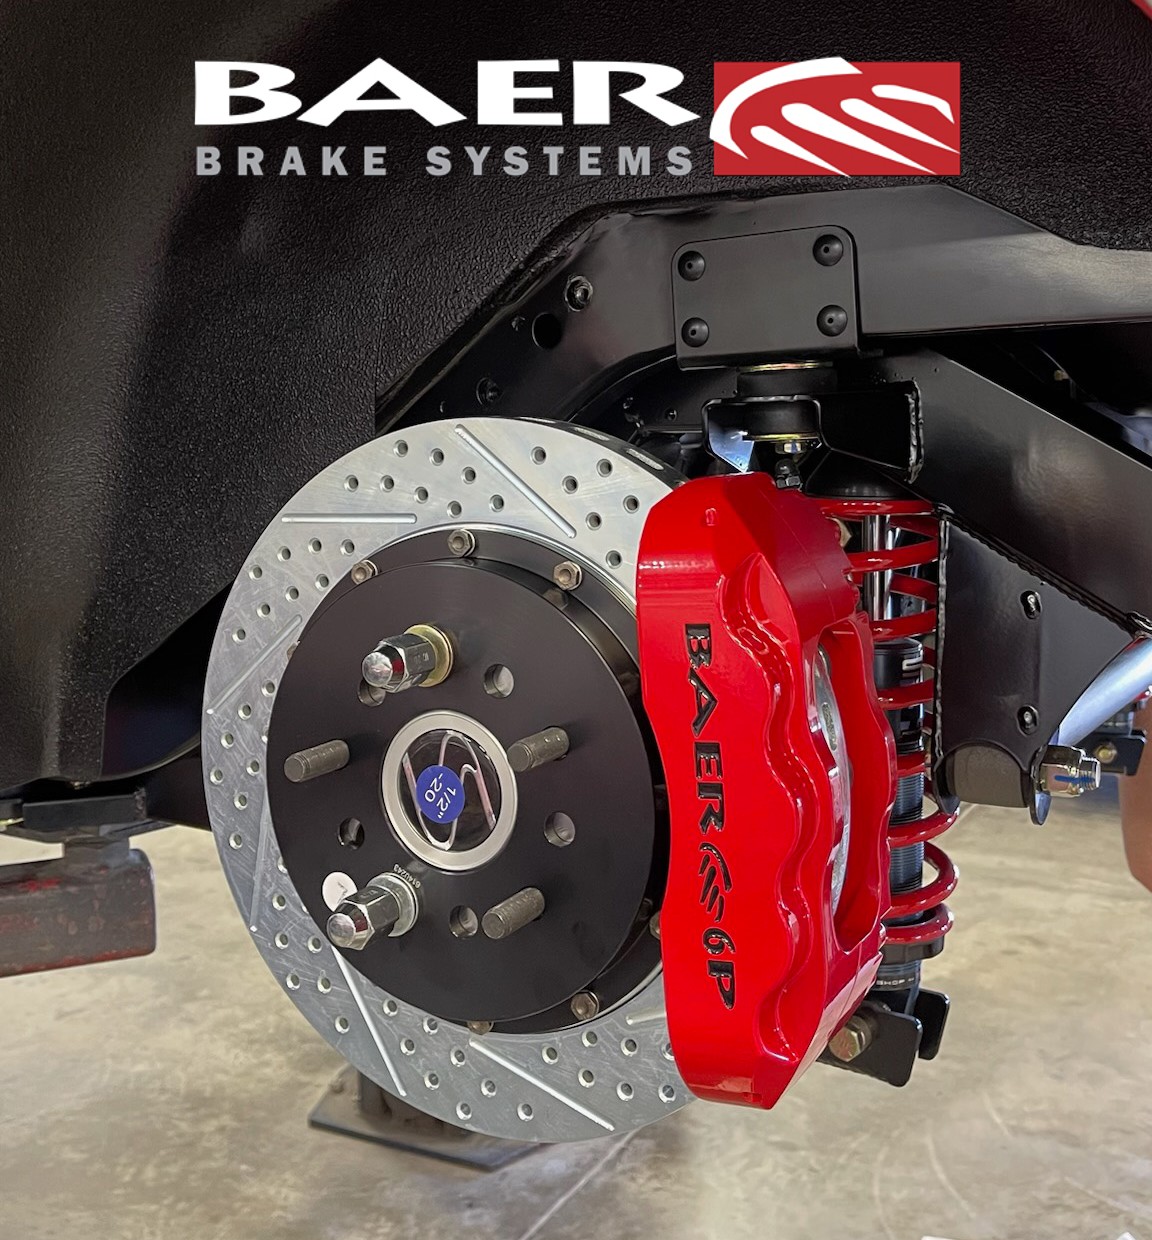 Baer Brakes 6 piston big brake system